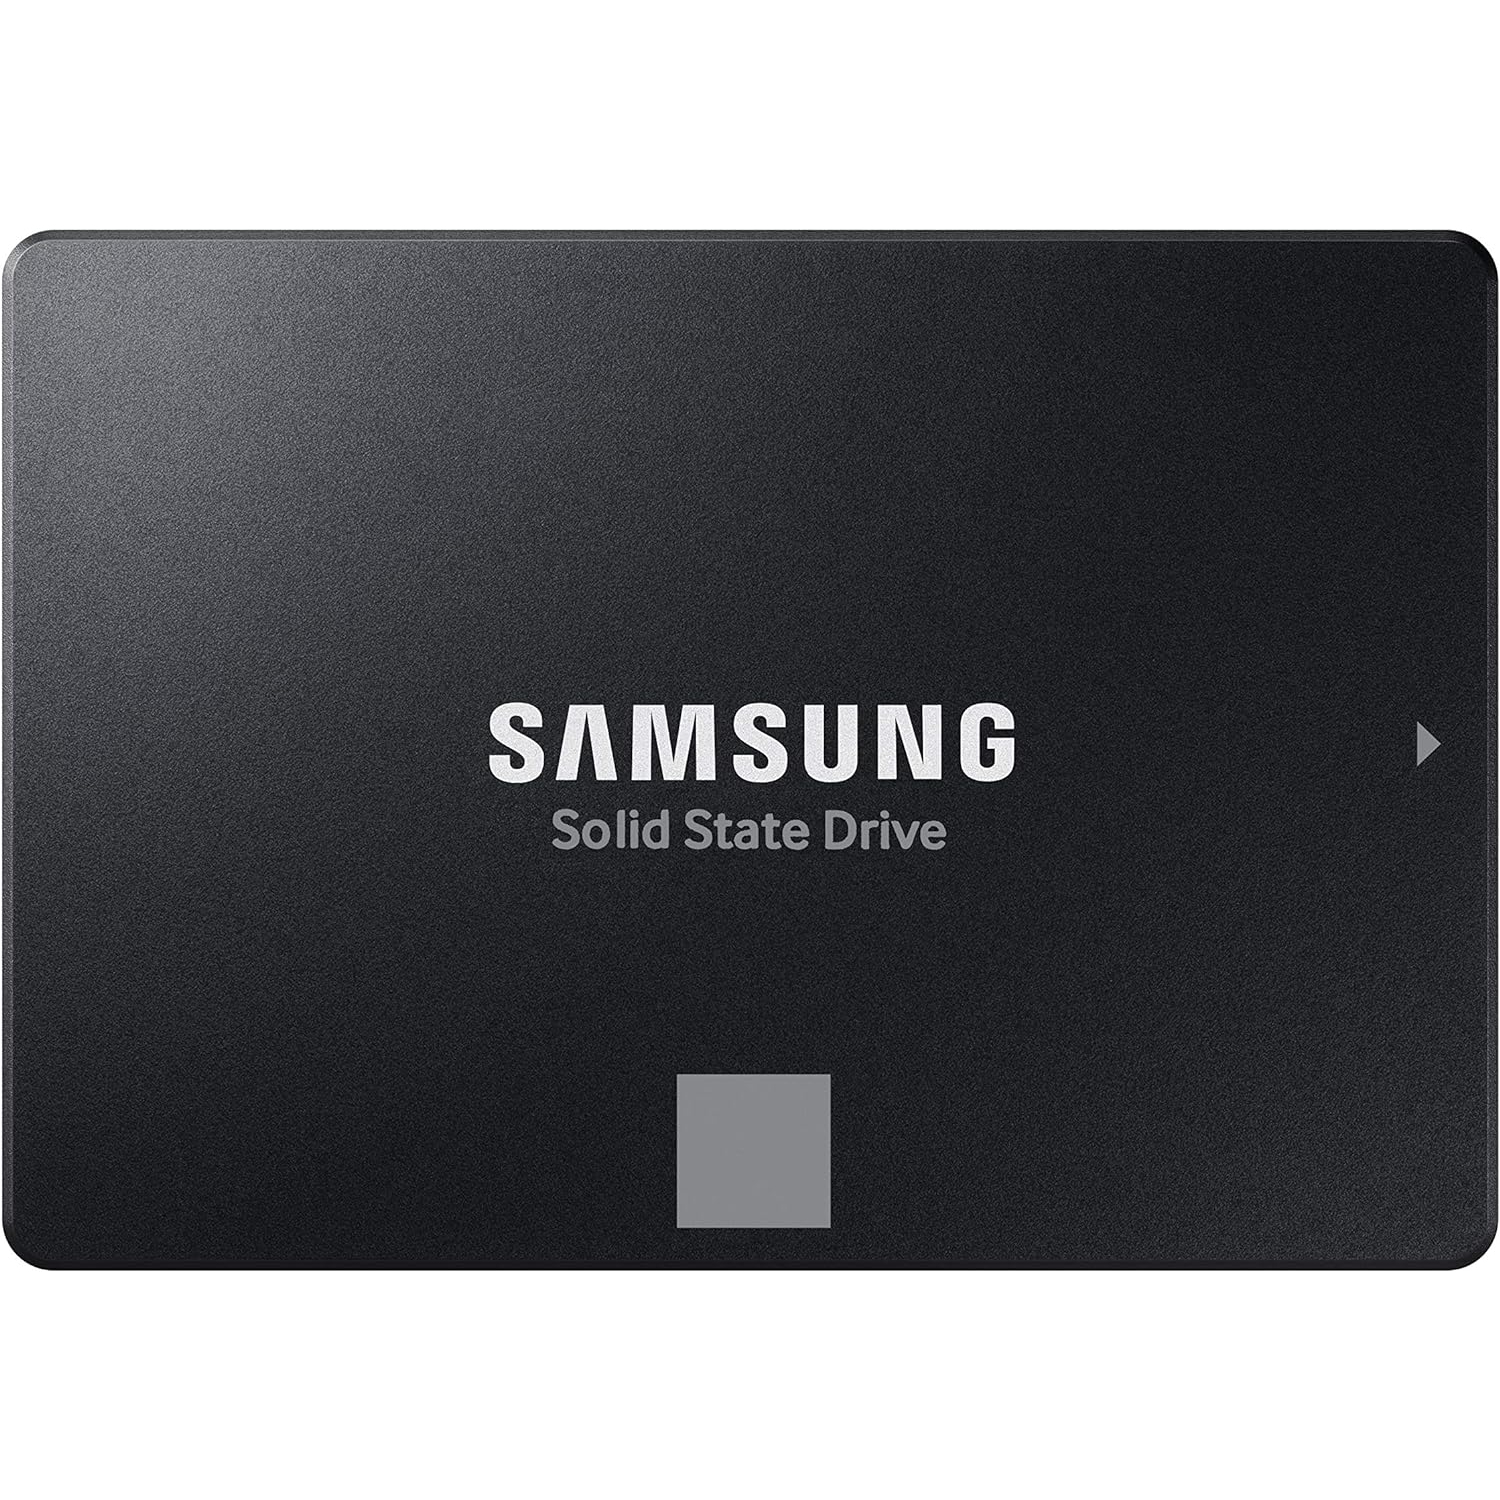 Refurbished ( Good ) Samsung 870 EVO-Series - 1TB SSD 2.5" - SATA III Internal Solid State Drive